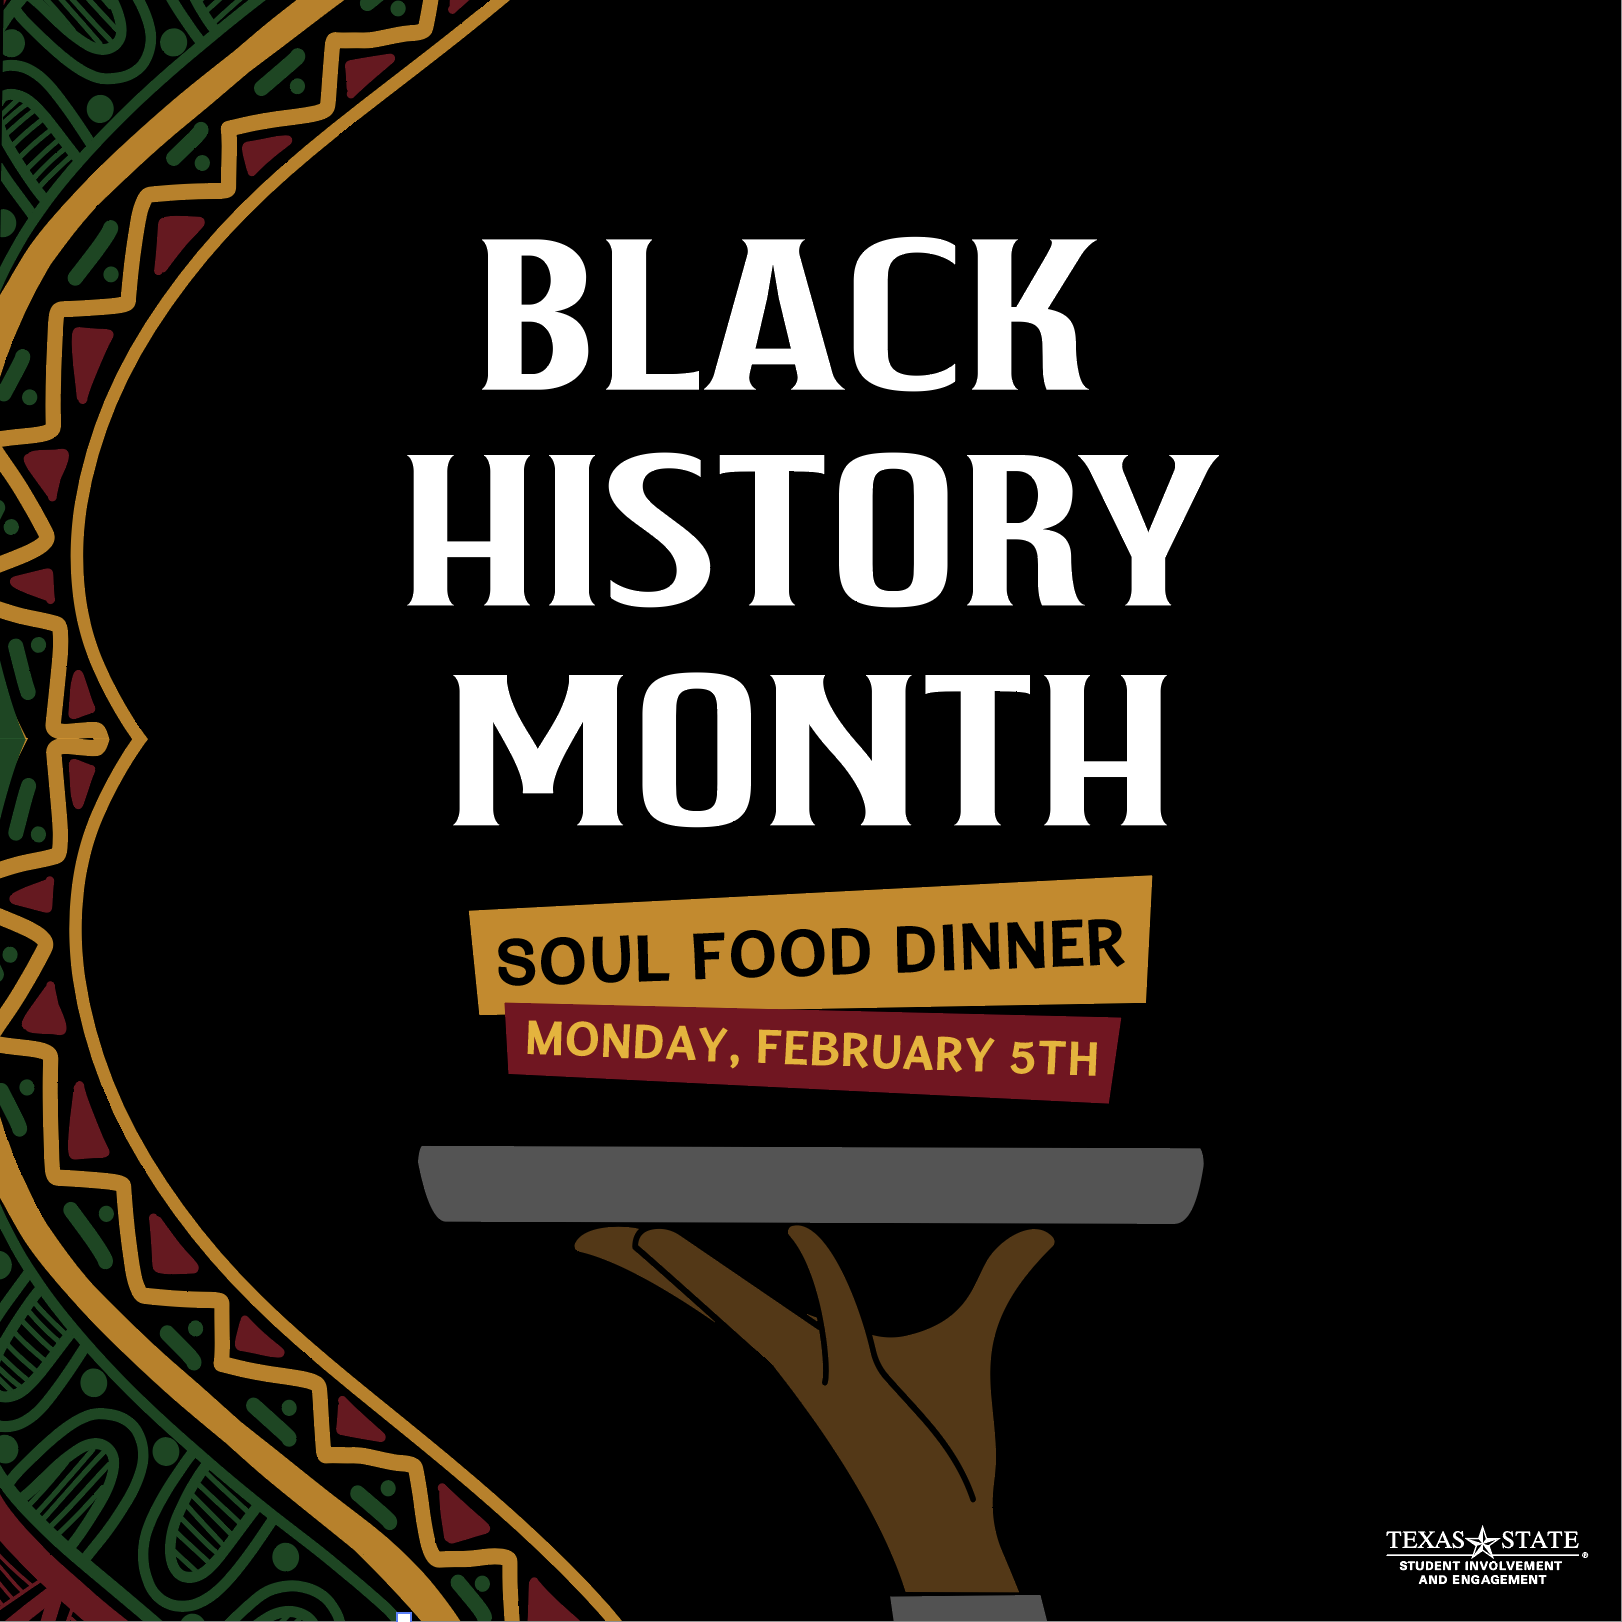 BLACK HISTORY MONTH SOUL FOOD